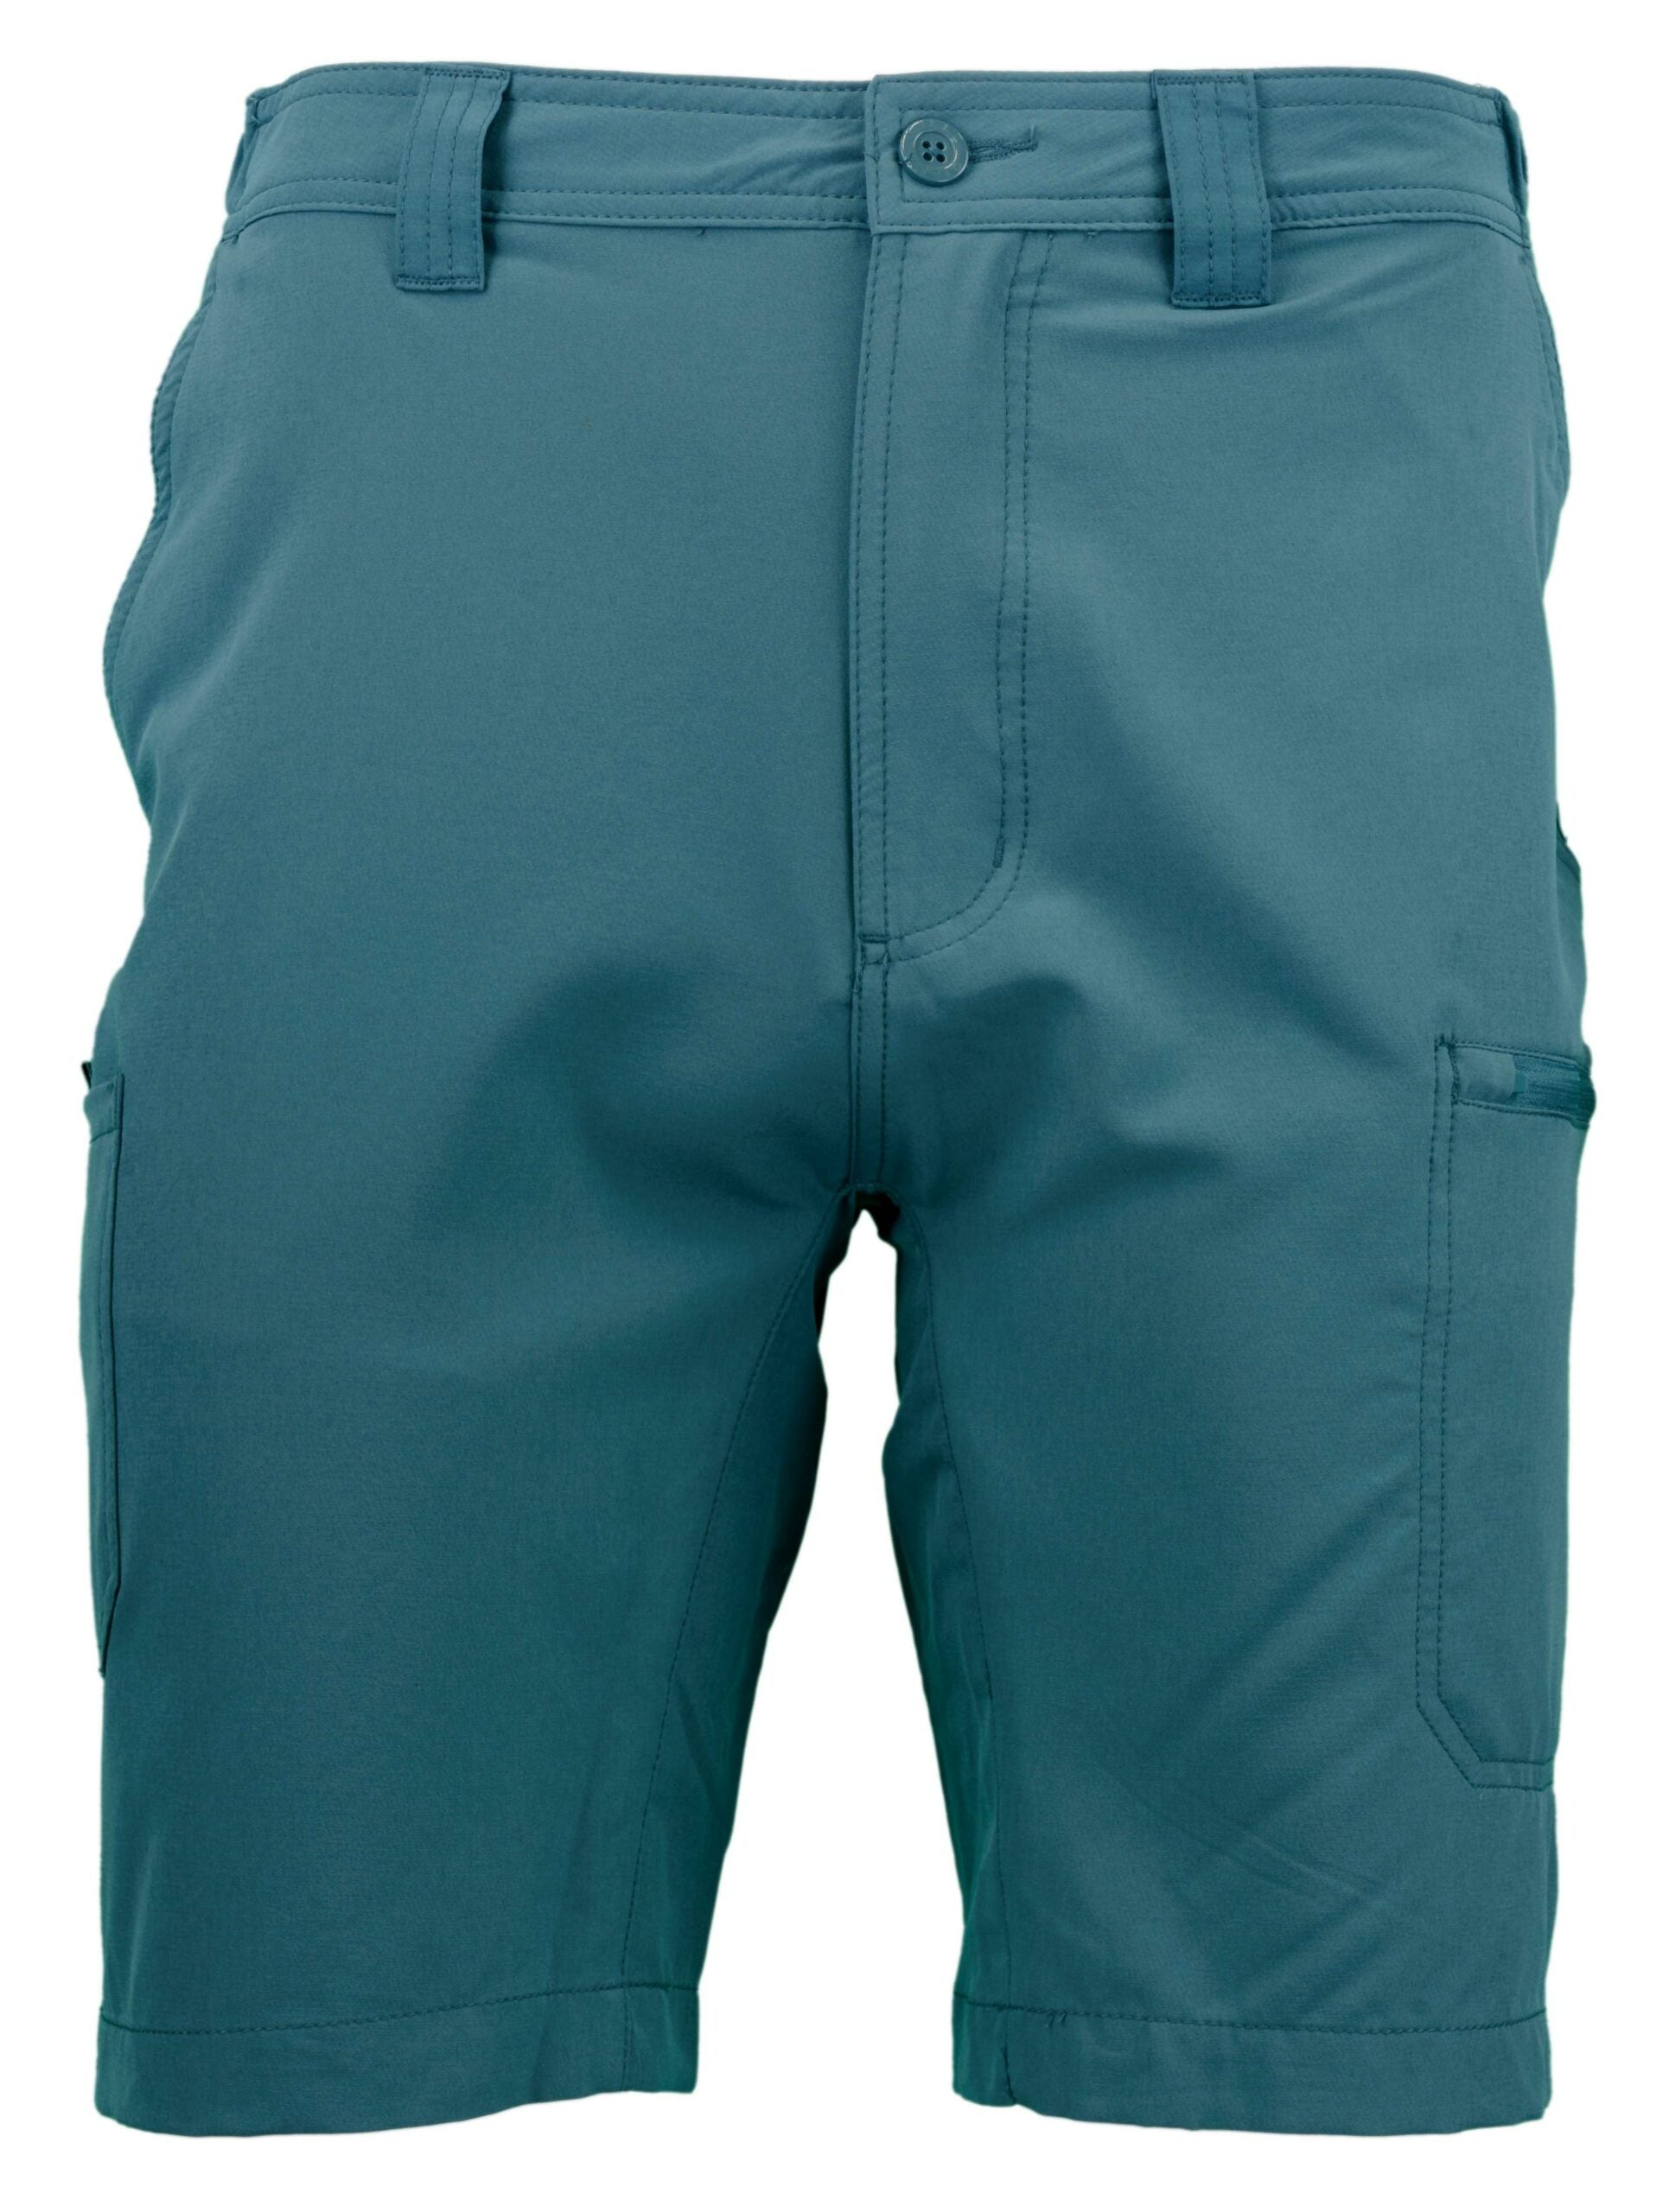 Gillz Men's Waterman Shorts (Teal, Large)